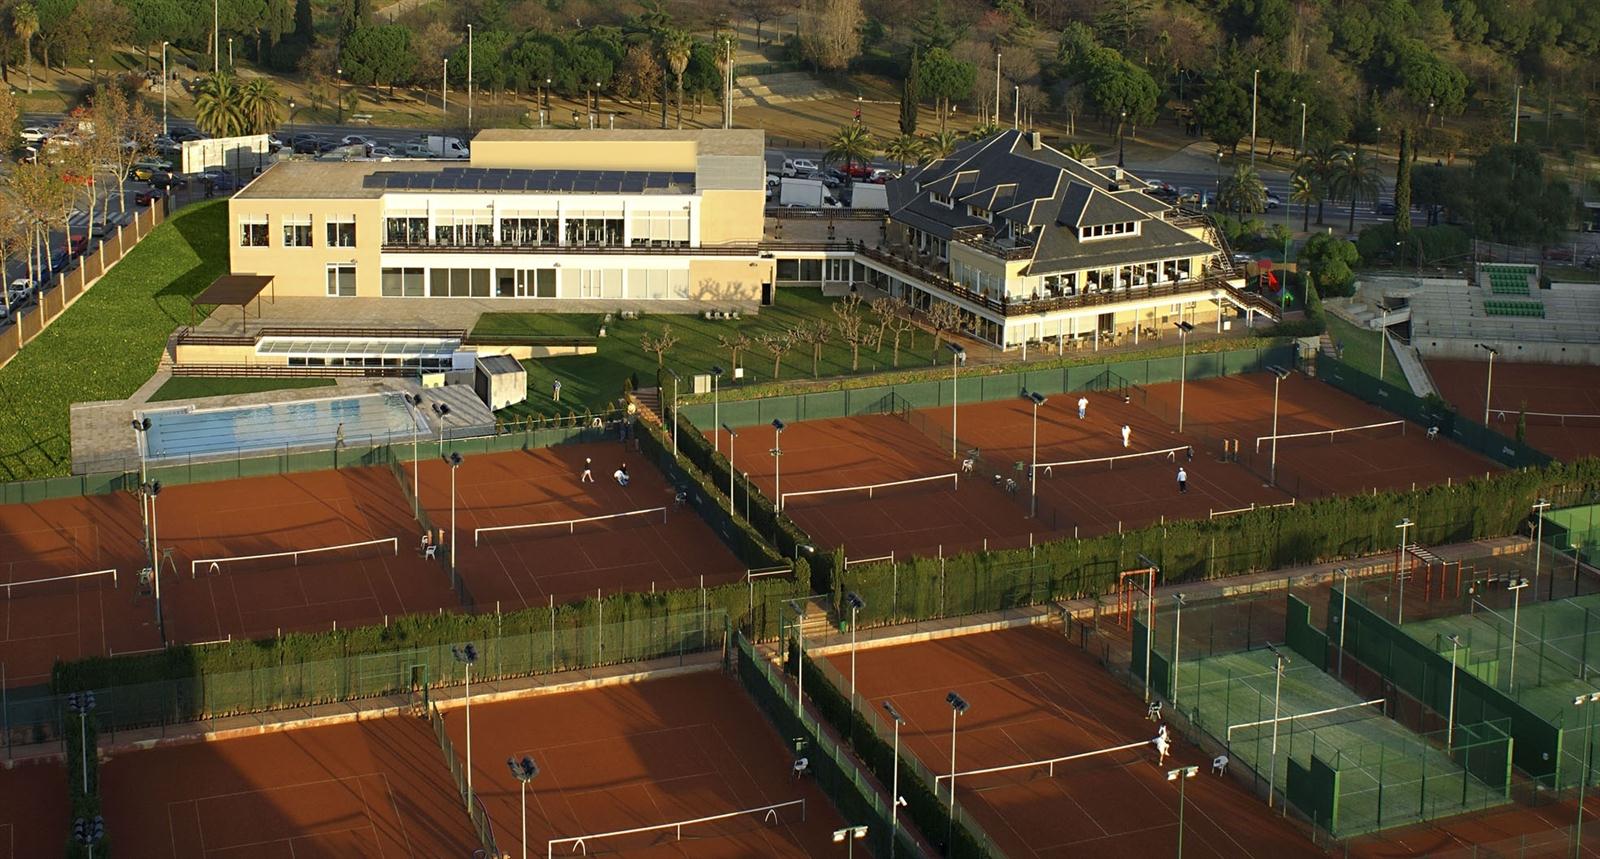 Club Internacional de Tenis Madrid